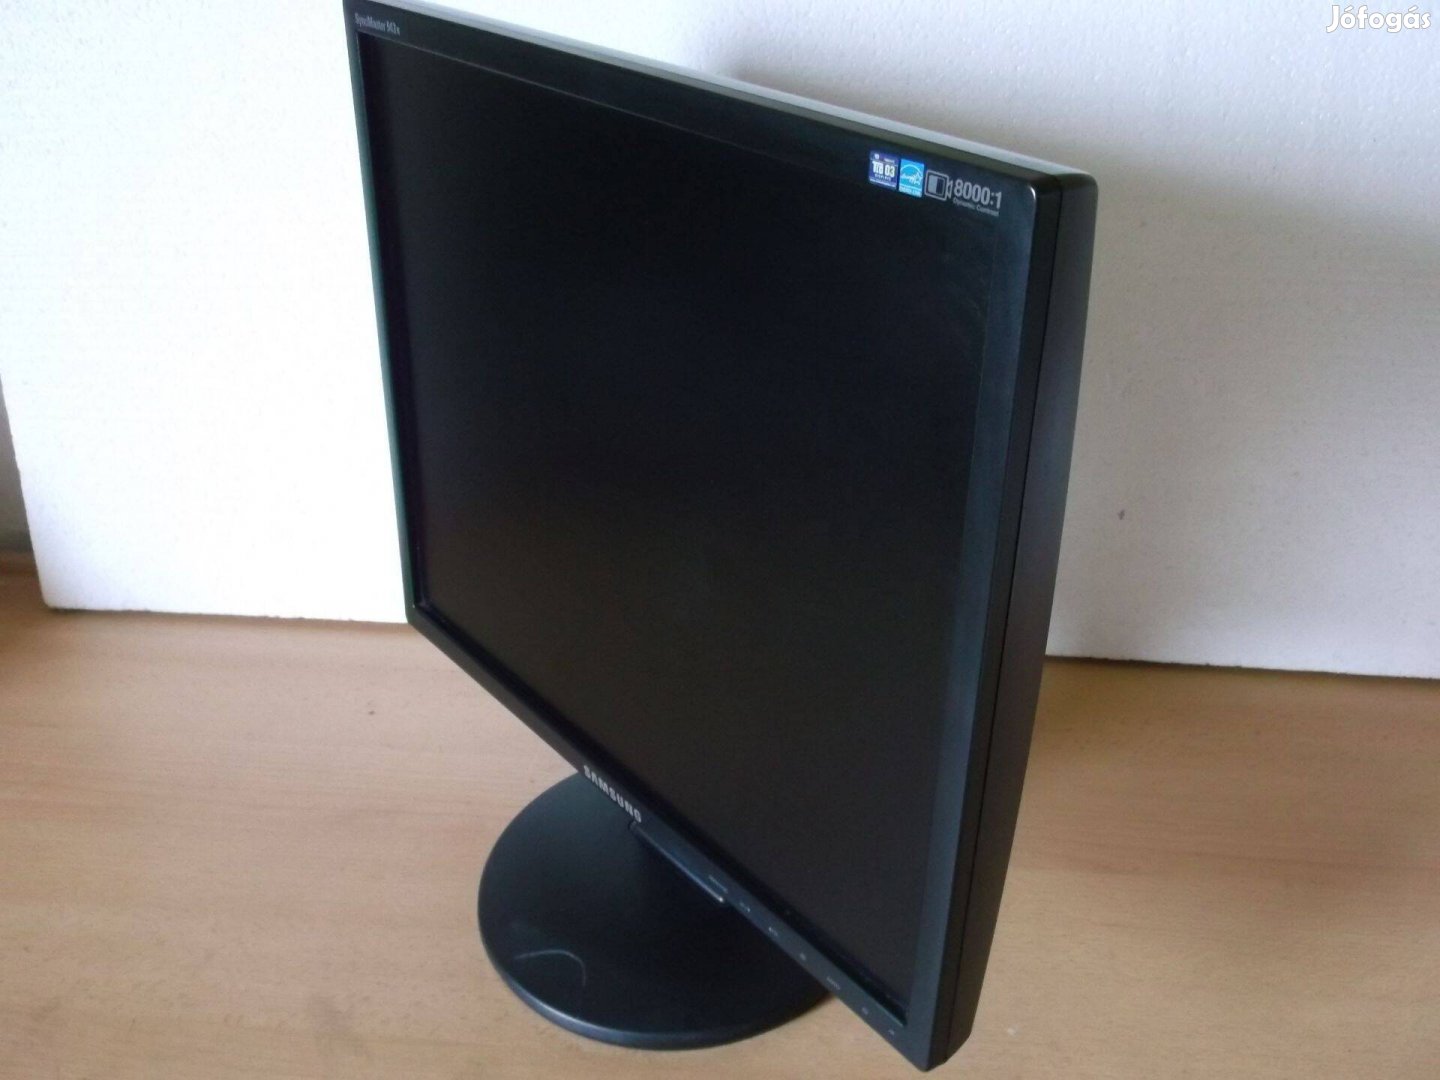 Samsung Syncmaster 943N 19 colos LCD monitor